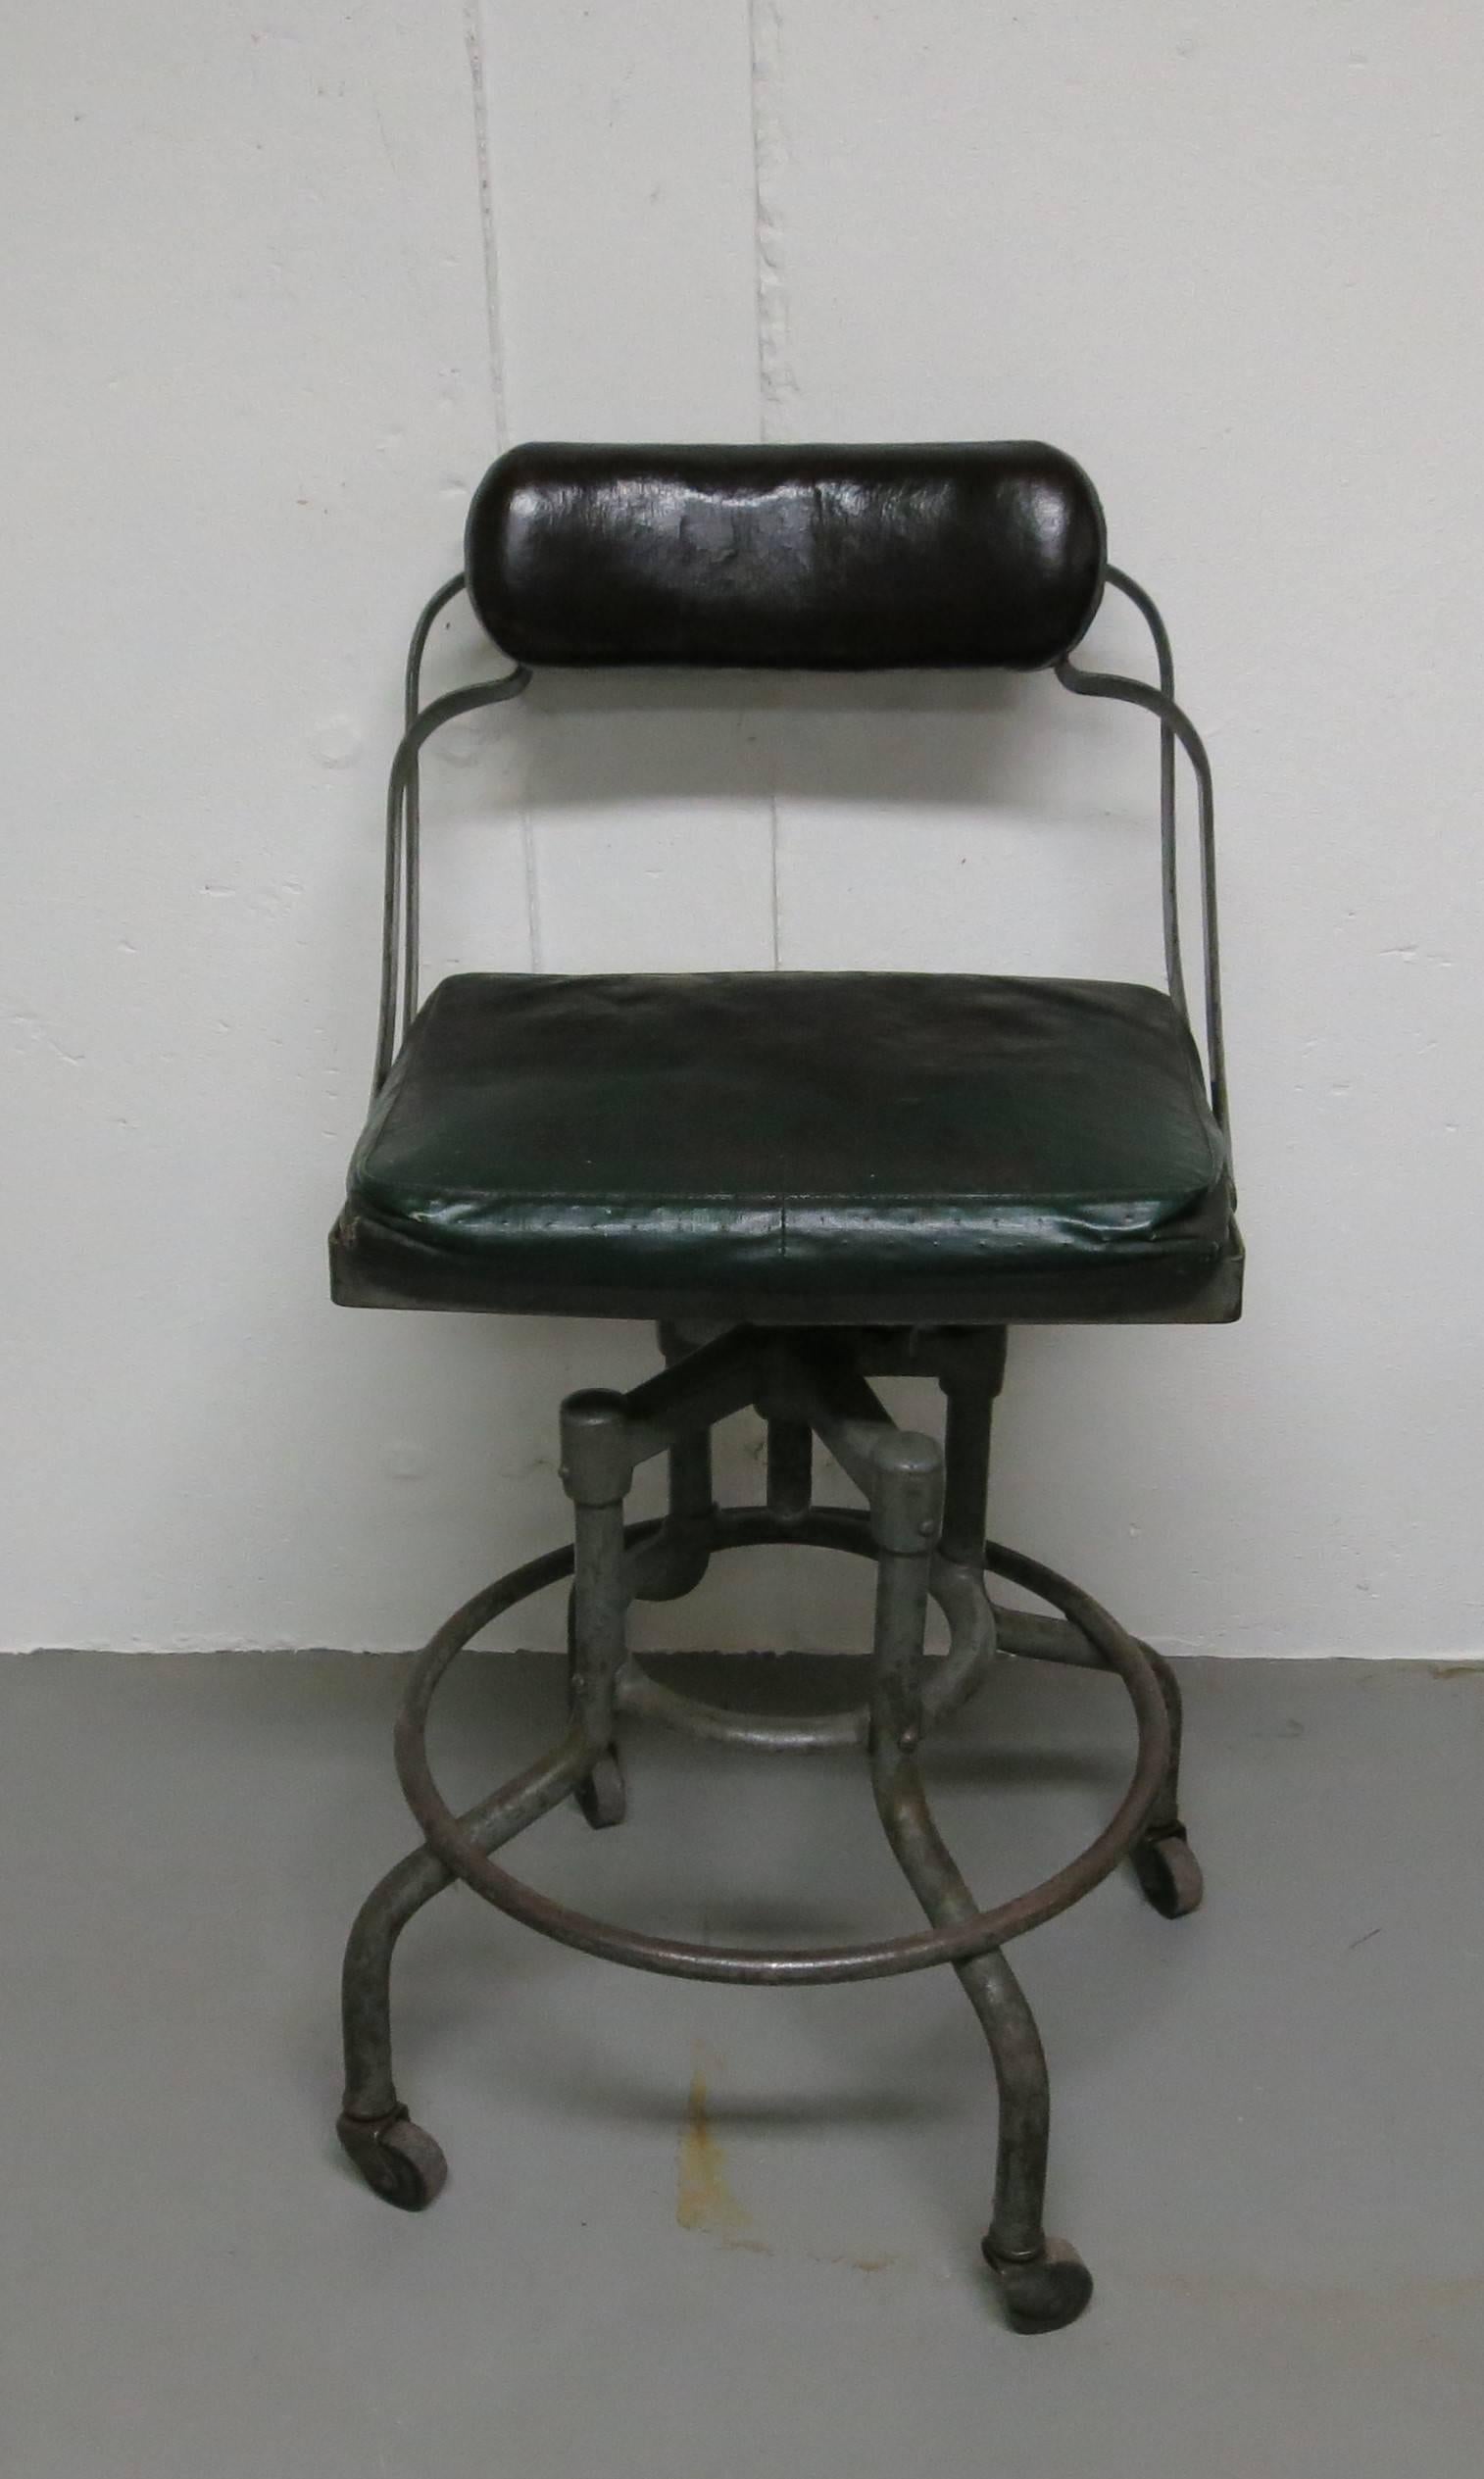 Iron Vintage Fritz Cross Industrial Chair Stool St. Paul Minnesota